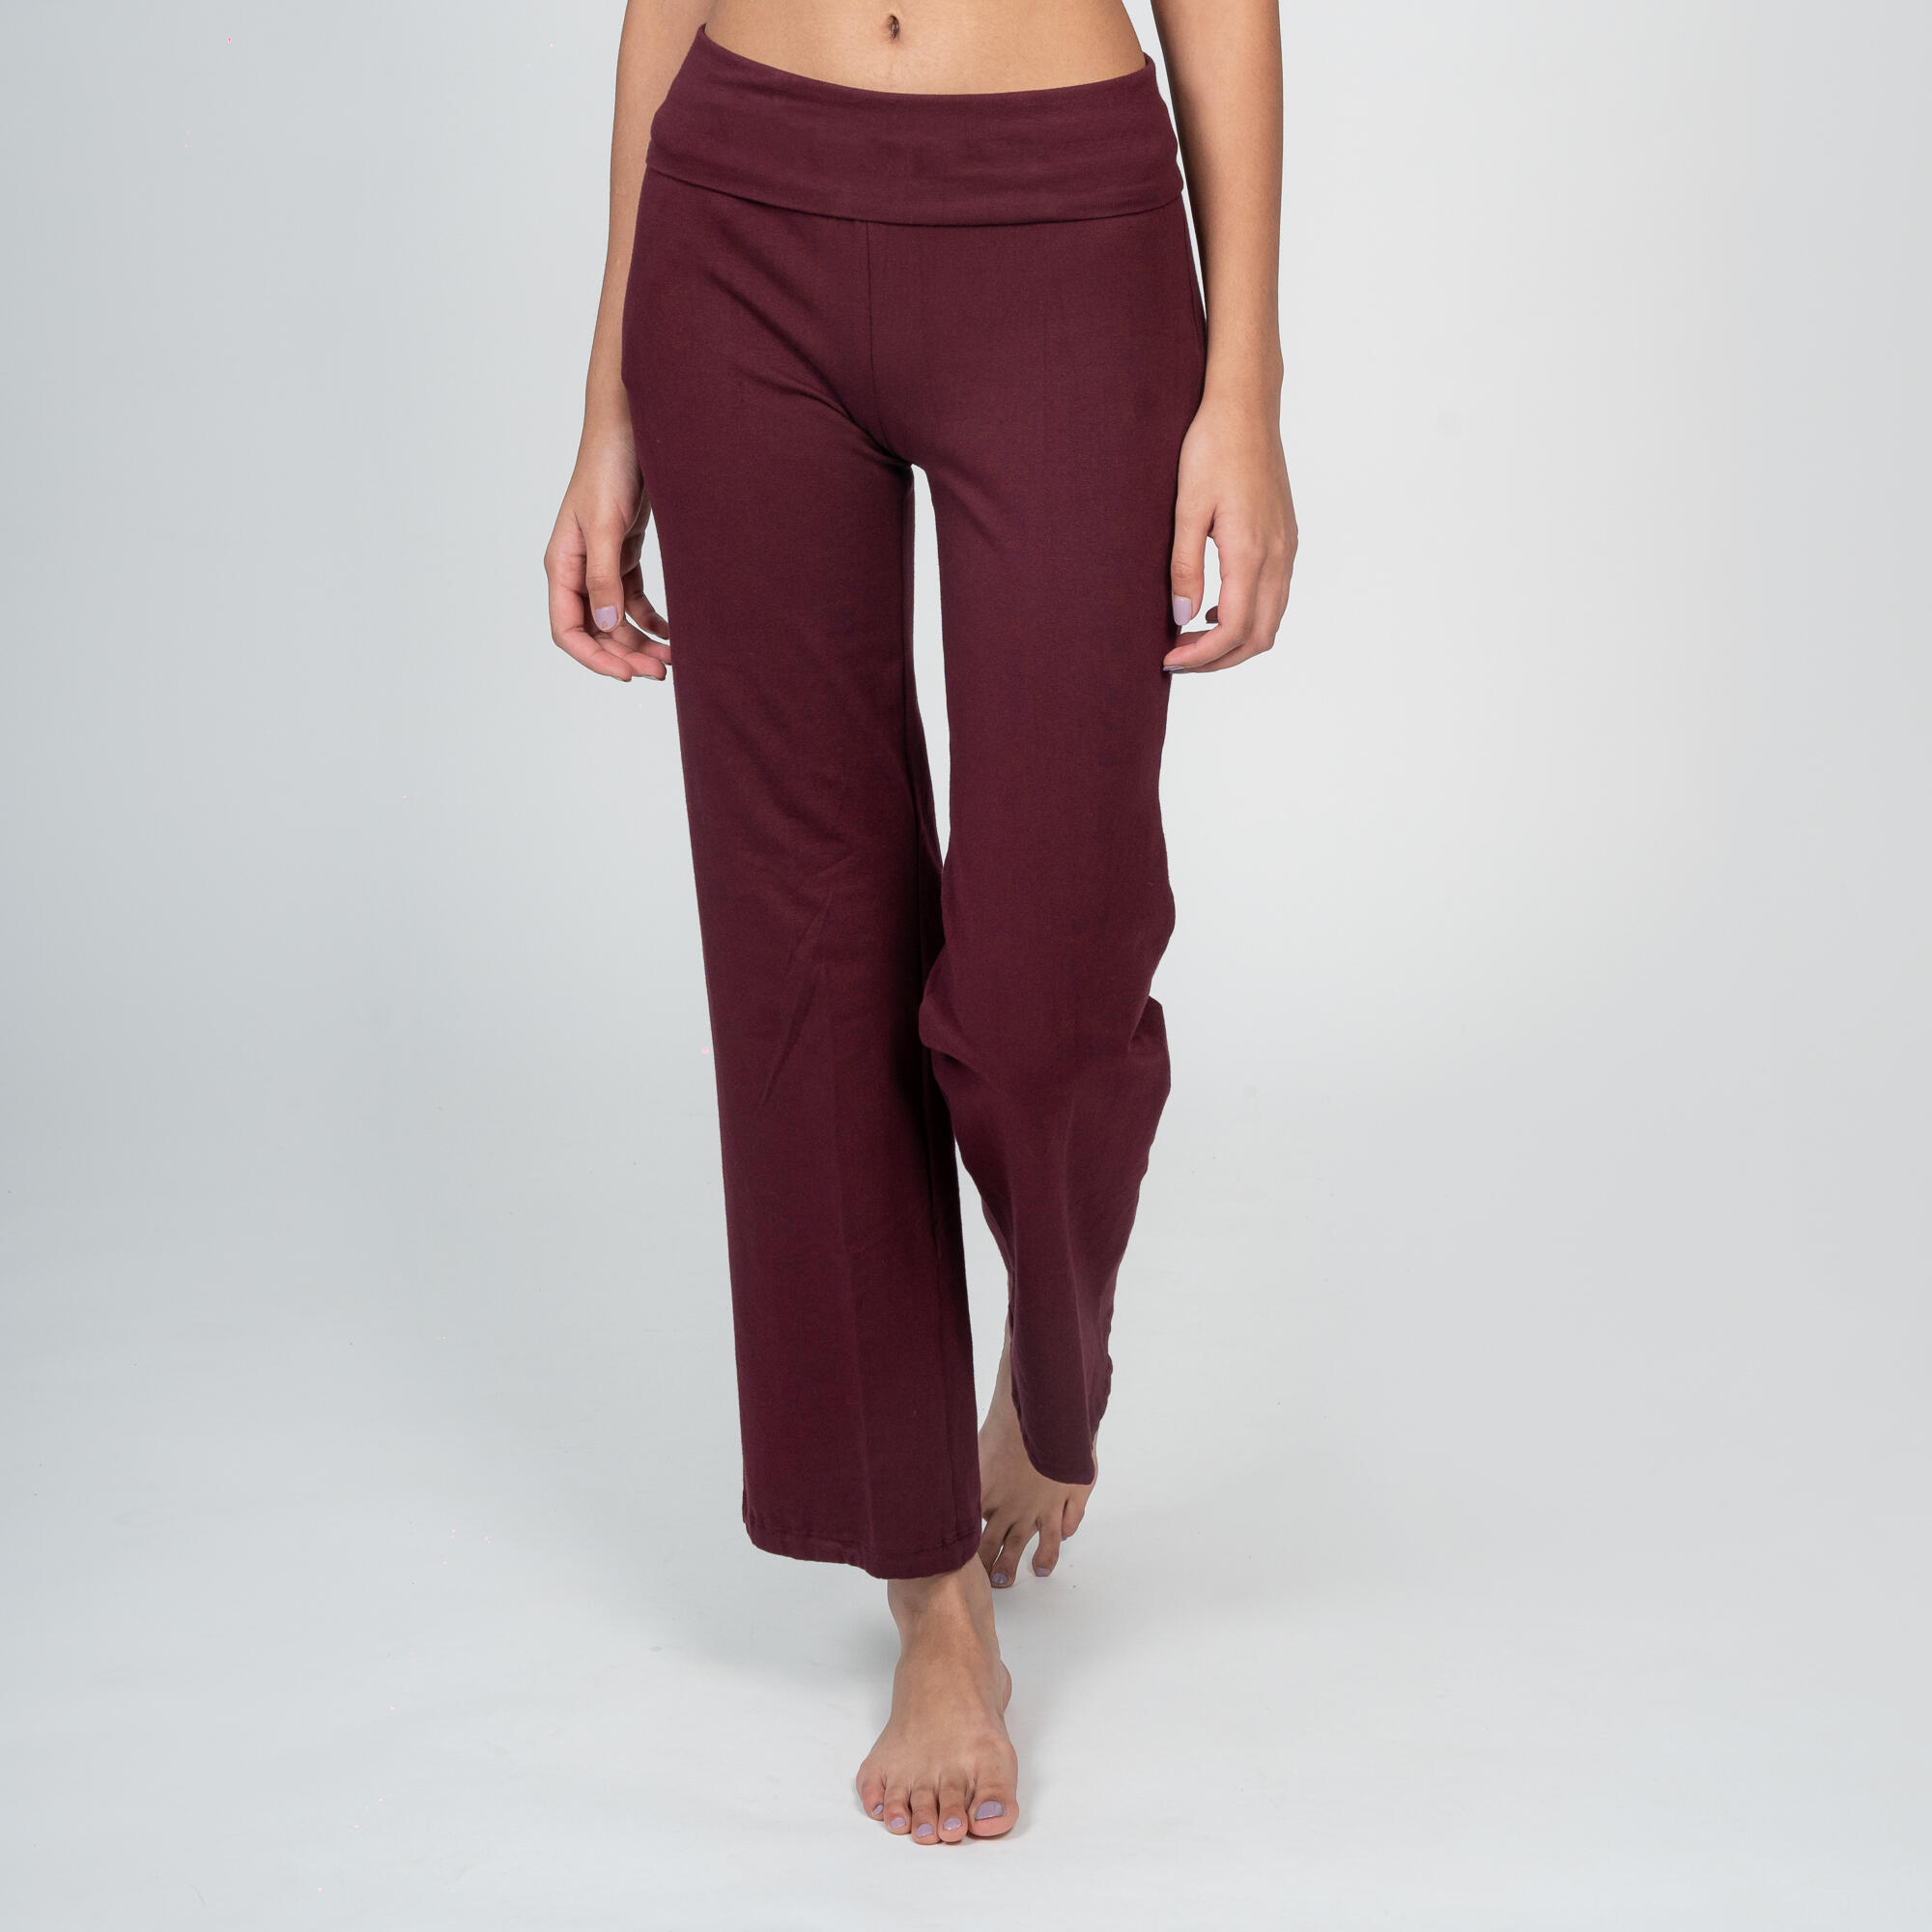 Buy Black Knitted Cotton Blend Yoga Pants (Yoga Pants) for INR850.00 | Biba  India